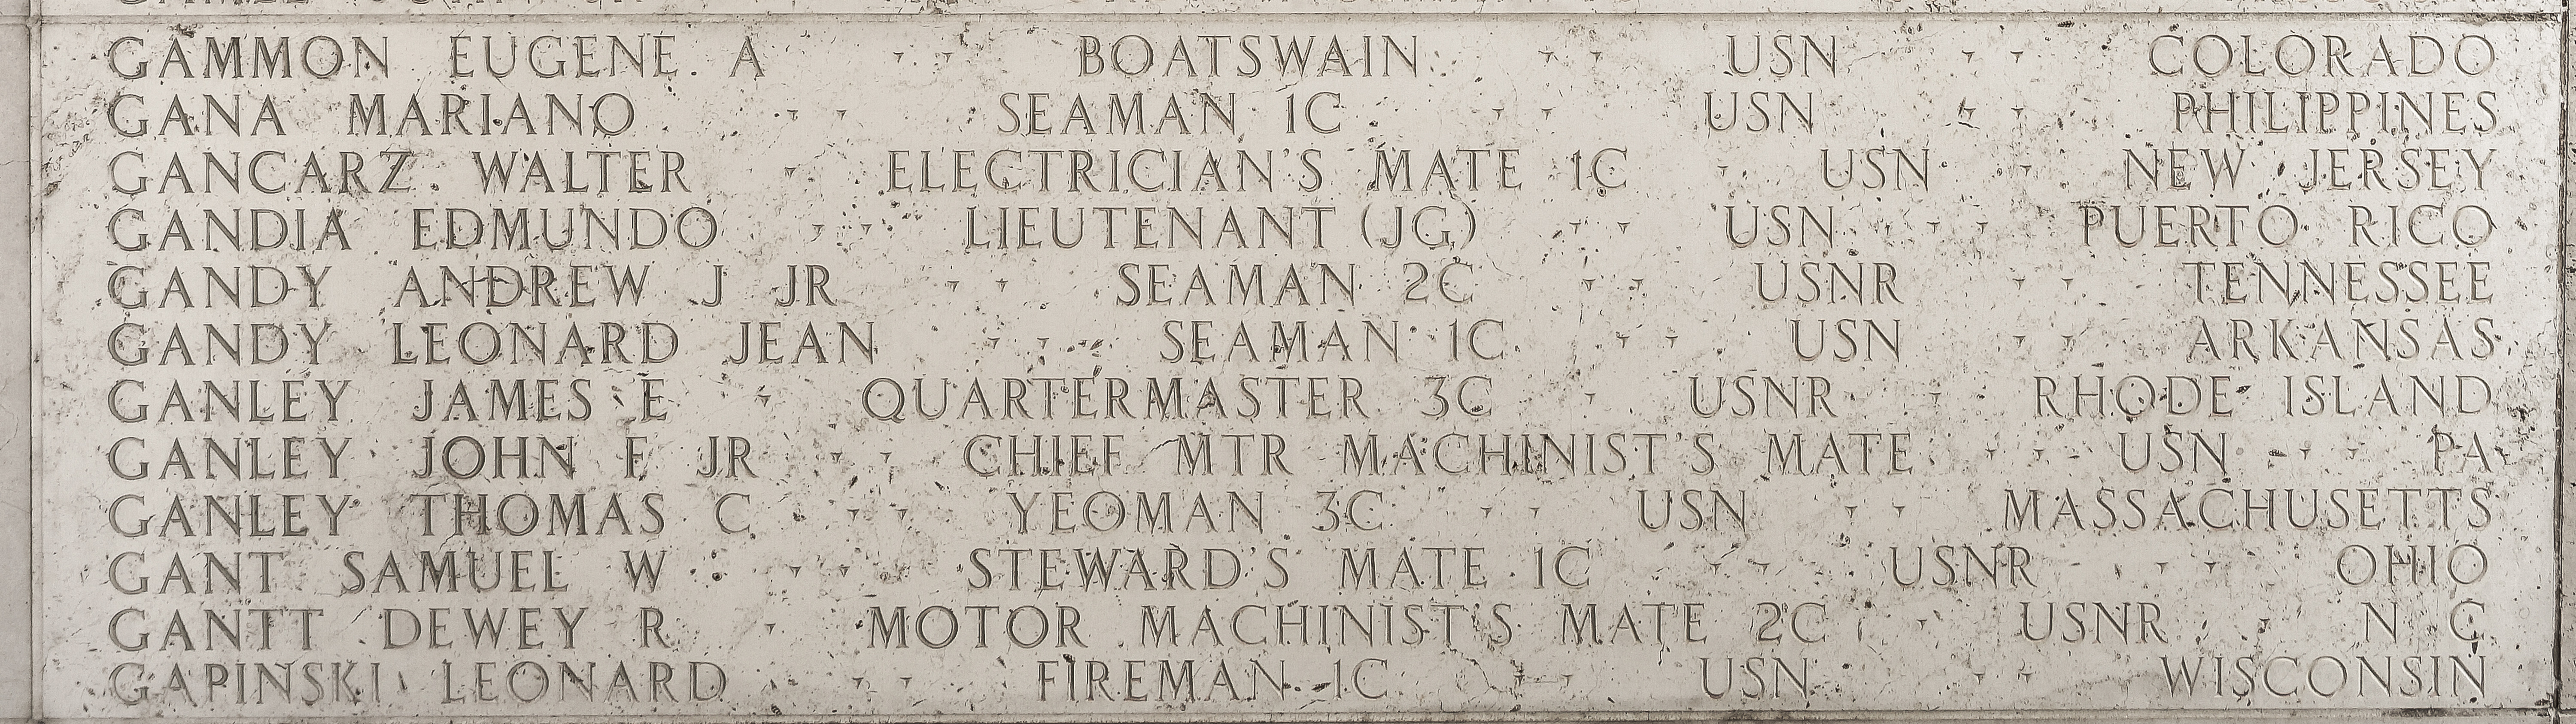 Eugene A. Gammon, Boatswain